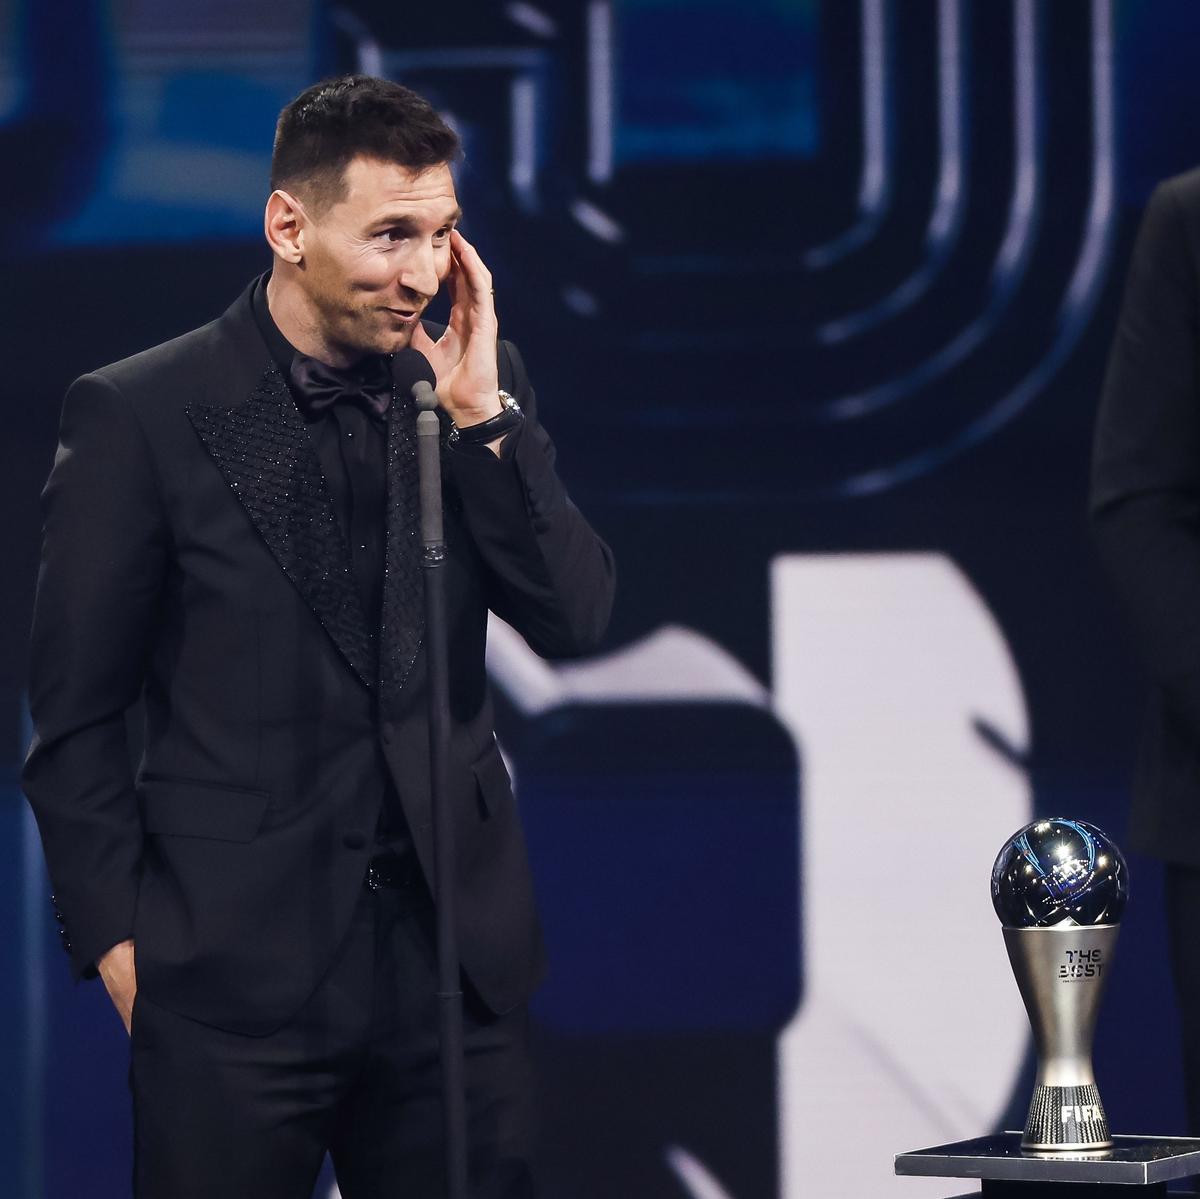 El futbolista argentino Lionel Messi del Paris Saint-Germain FC con su premio The Best FIFA